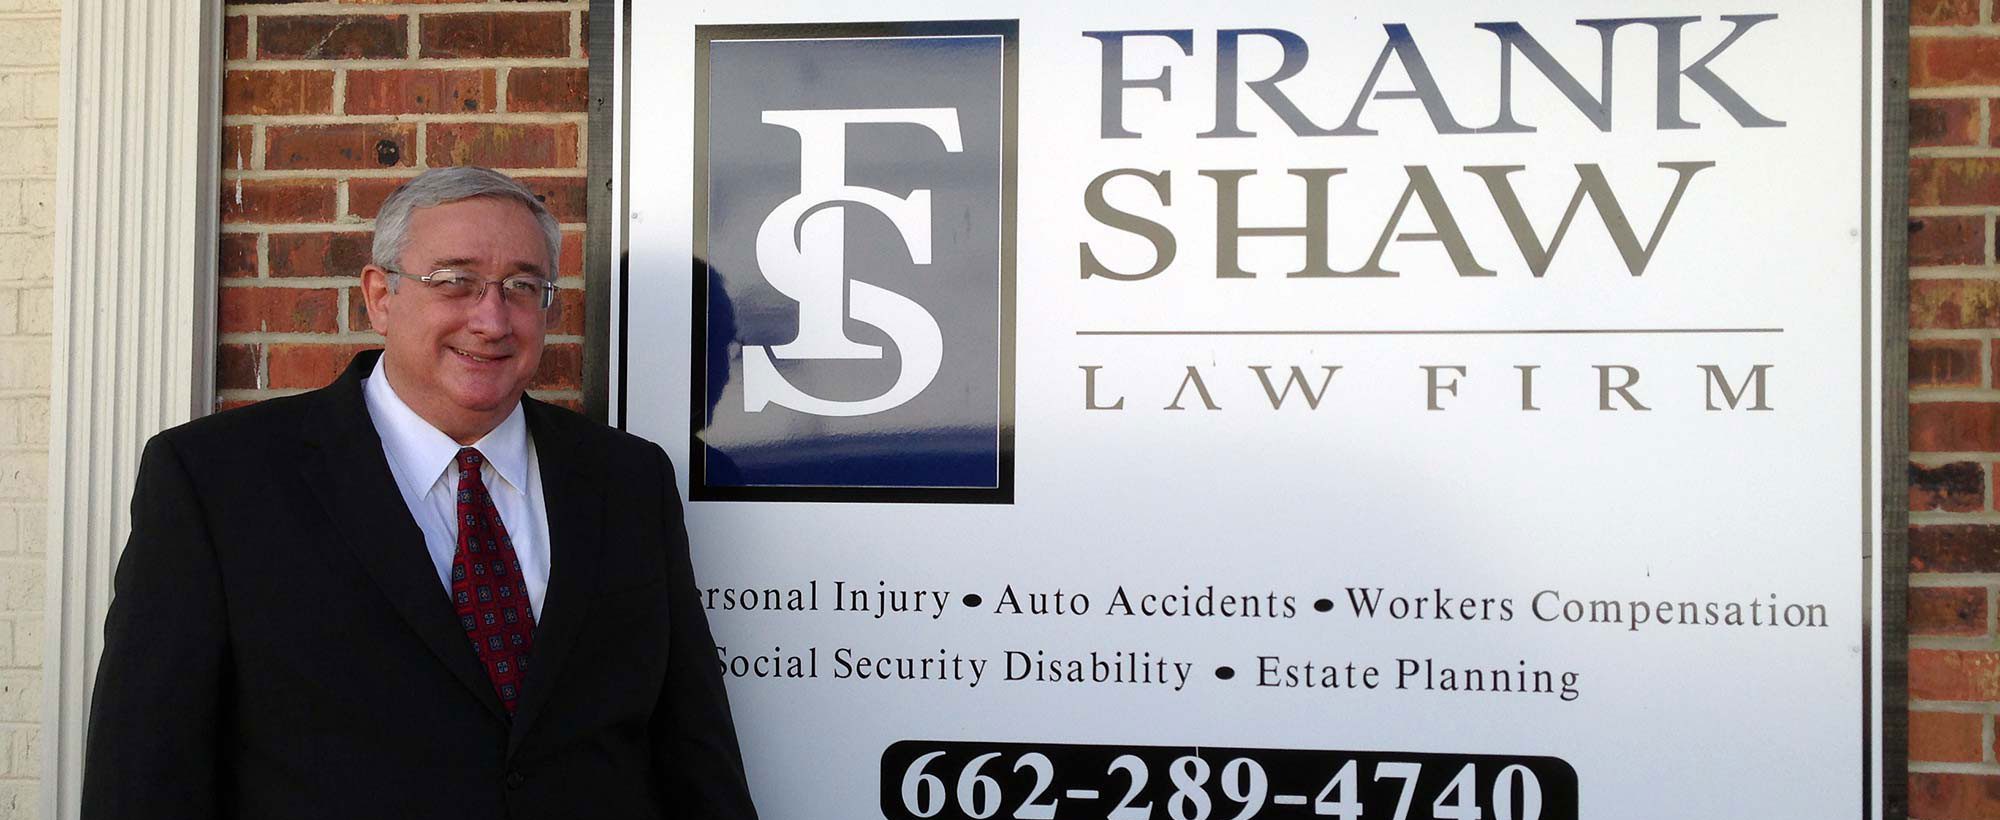 Frank Shaw Law Firm, Kosciusko, MS Storefront Sign